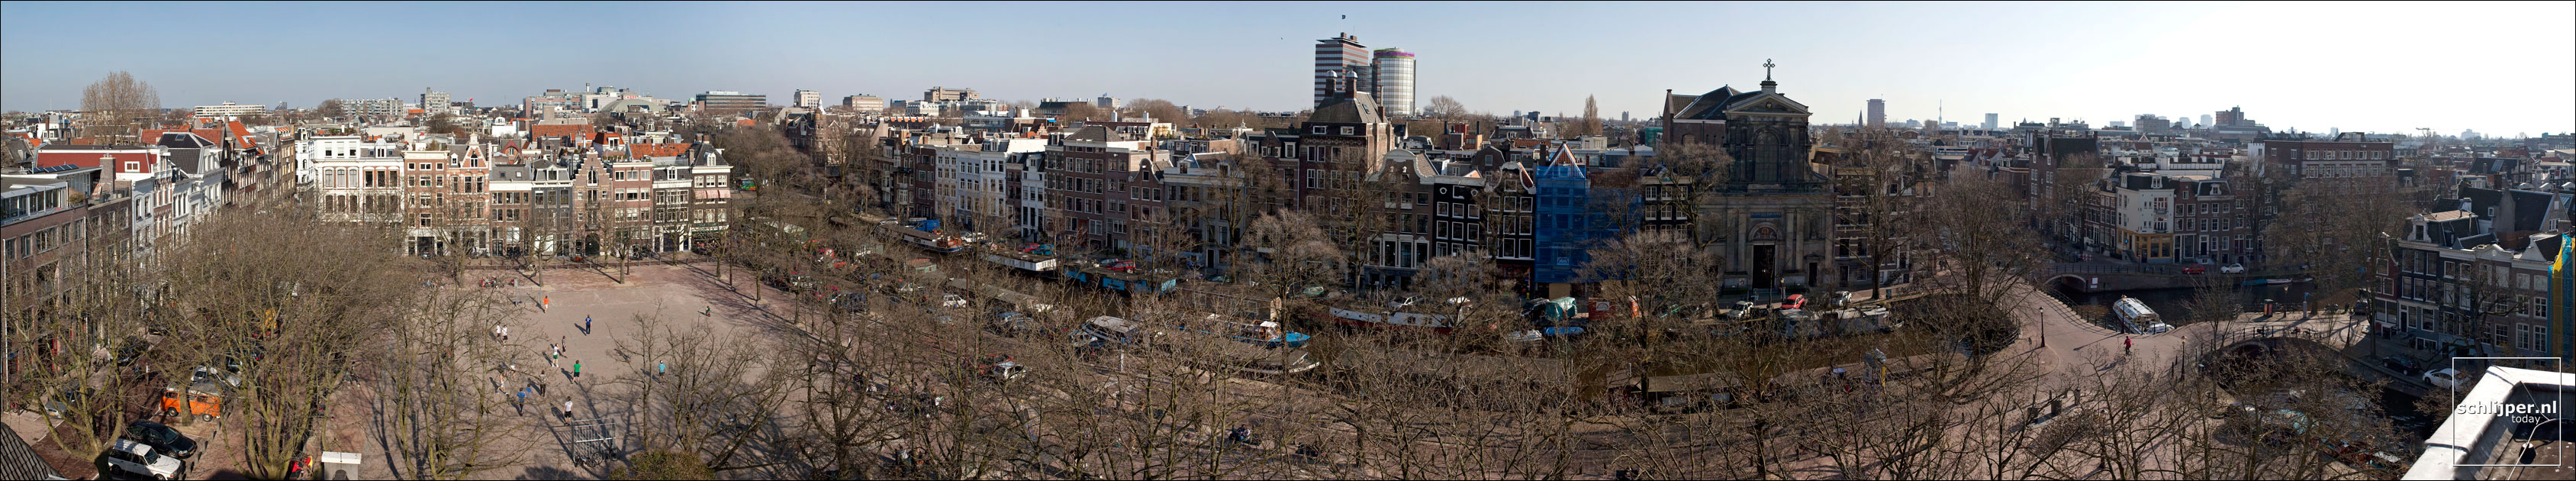 Nederland, Amsterdam, 6 april 2010